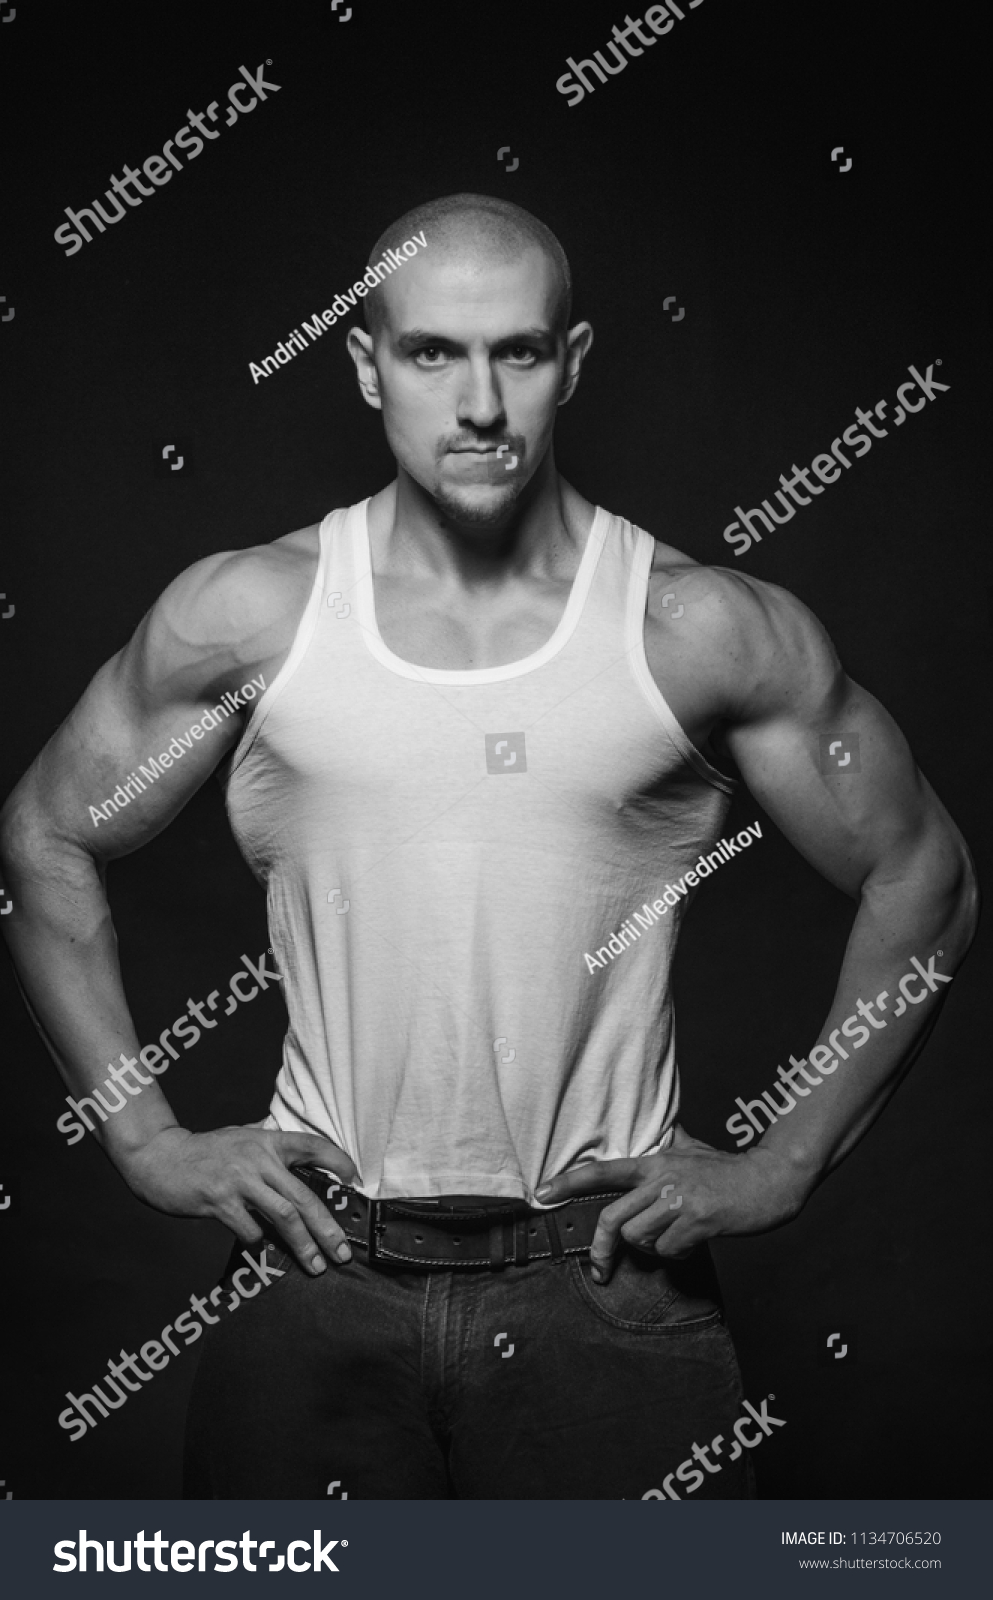 Sexy Bald Guy Poses Topless Studio Nh C S N Shutterstock